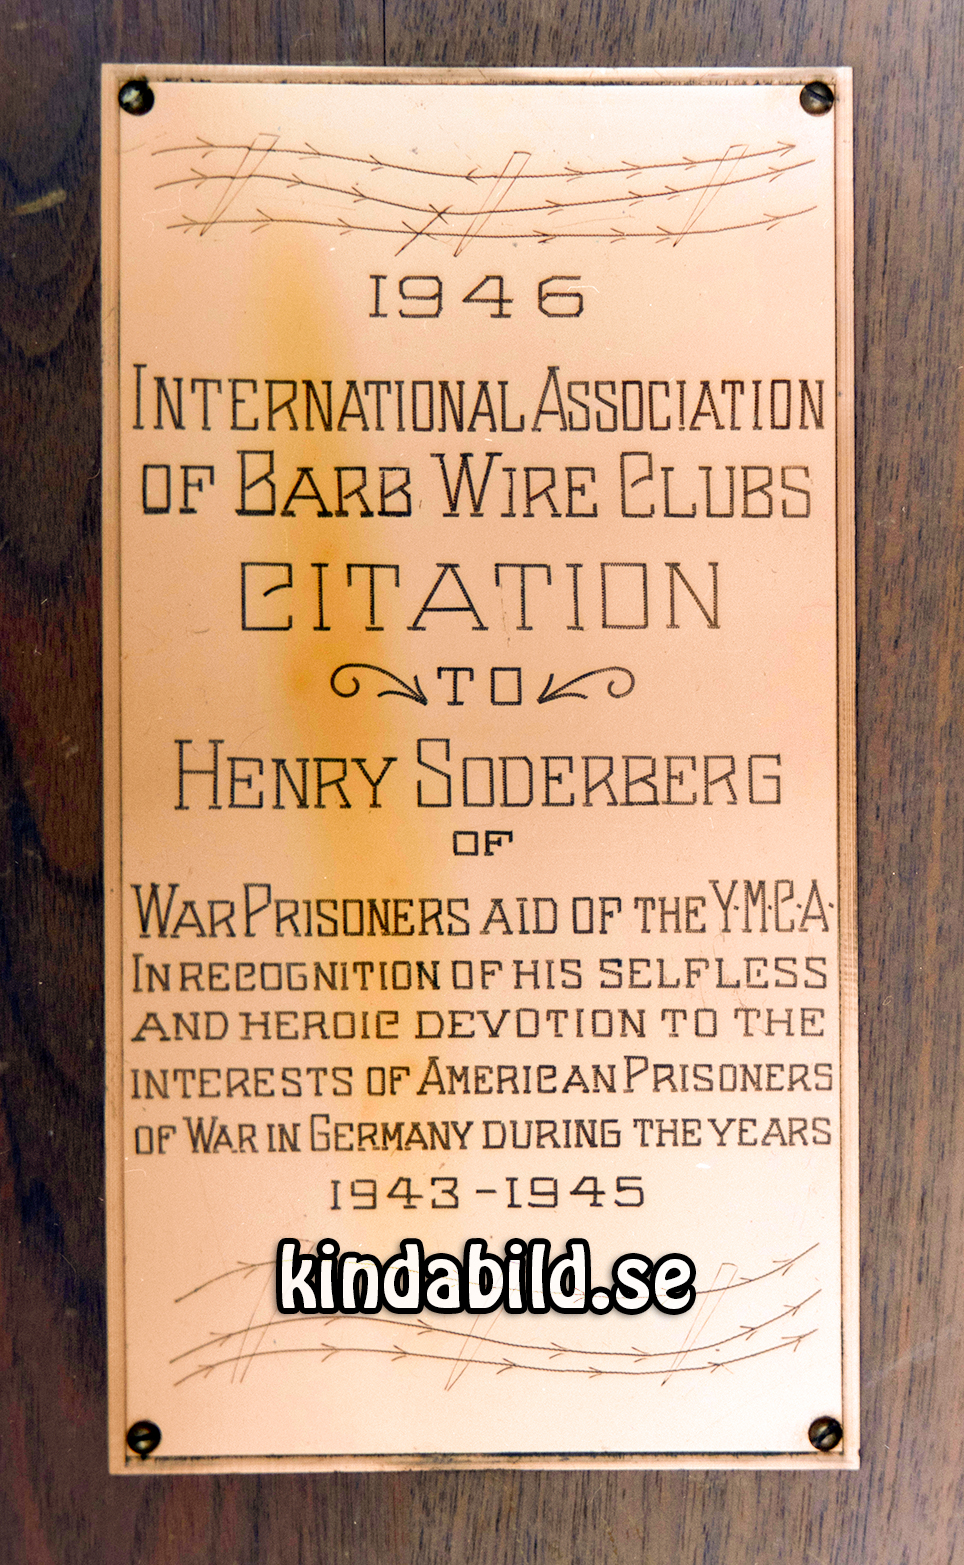 Henry Söderberg Stockholm
raja
Diplom 

